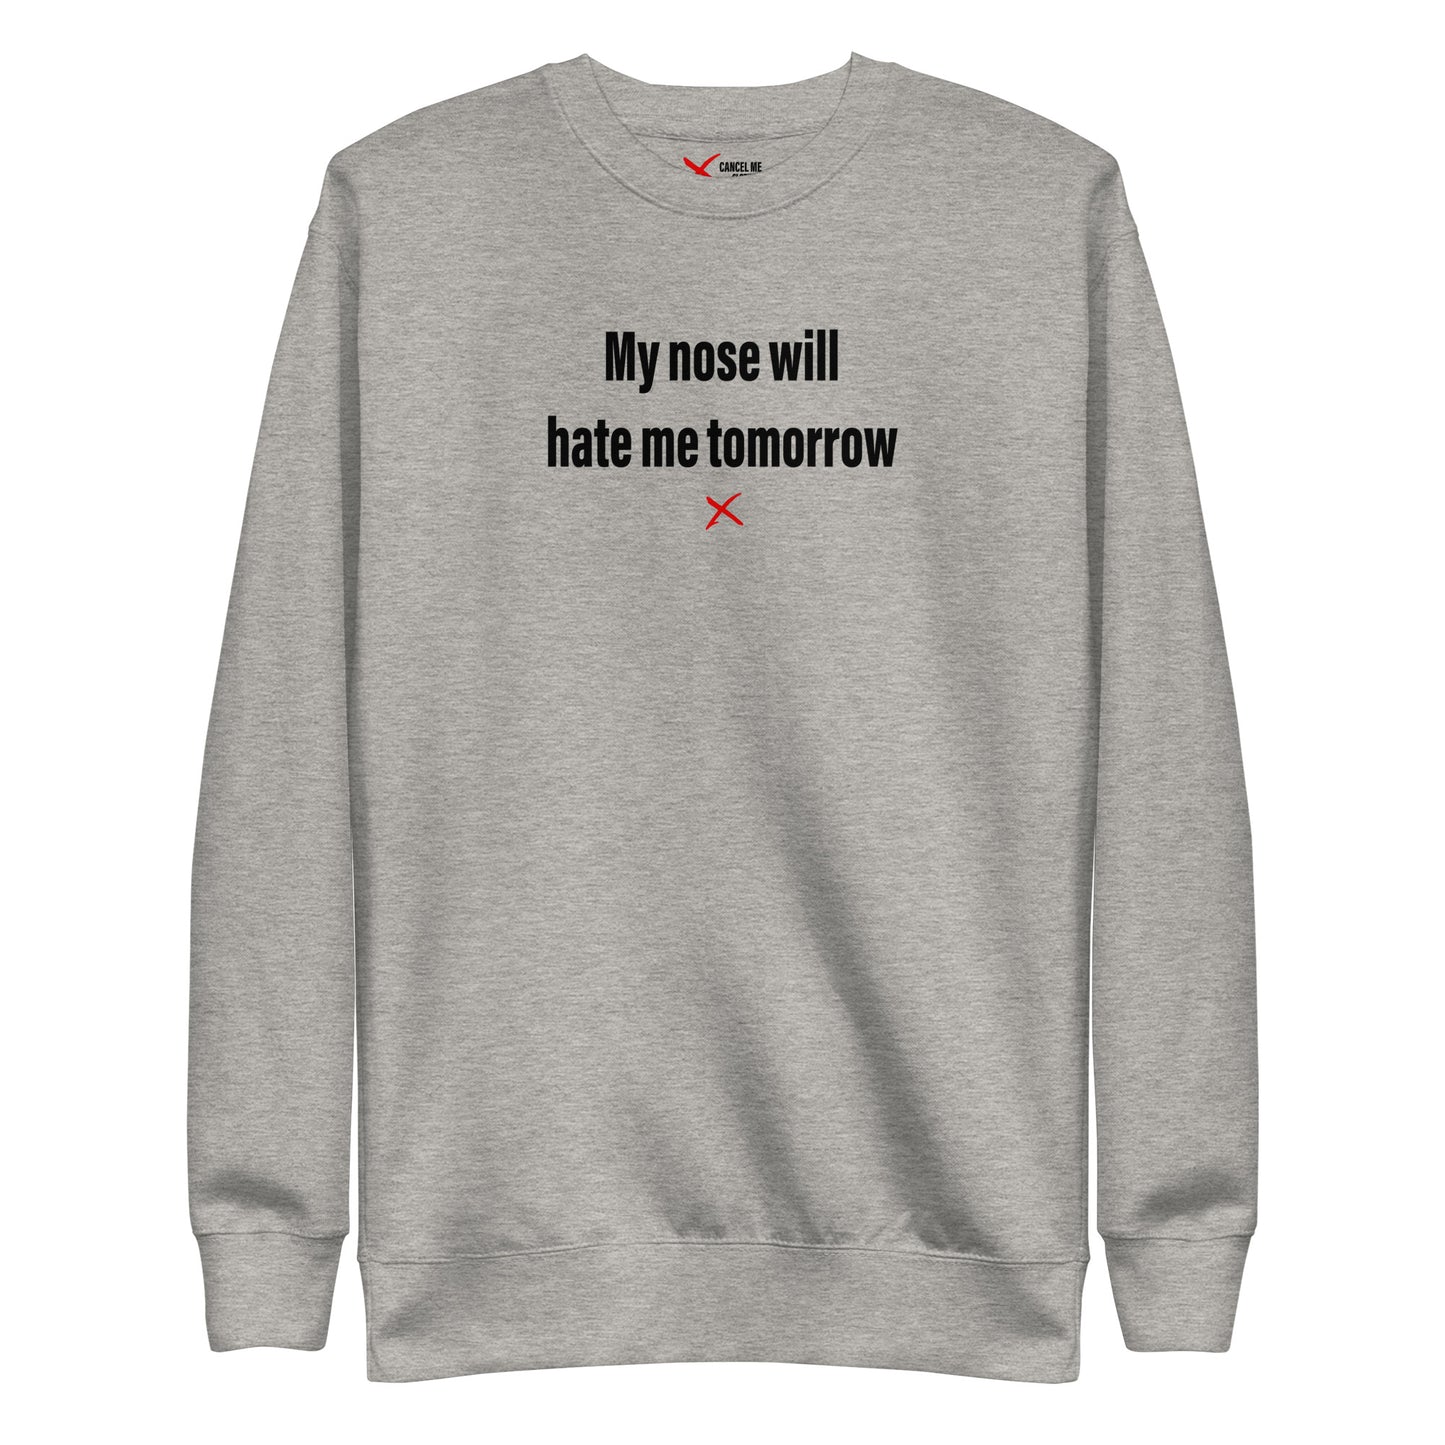 My nose will hate me tomorrow - Sweatshirt